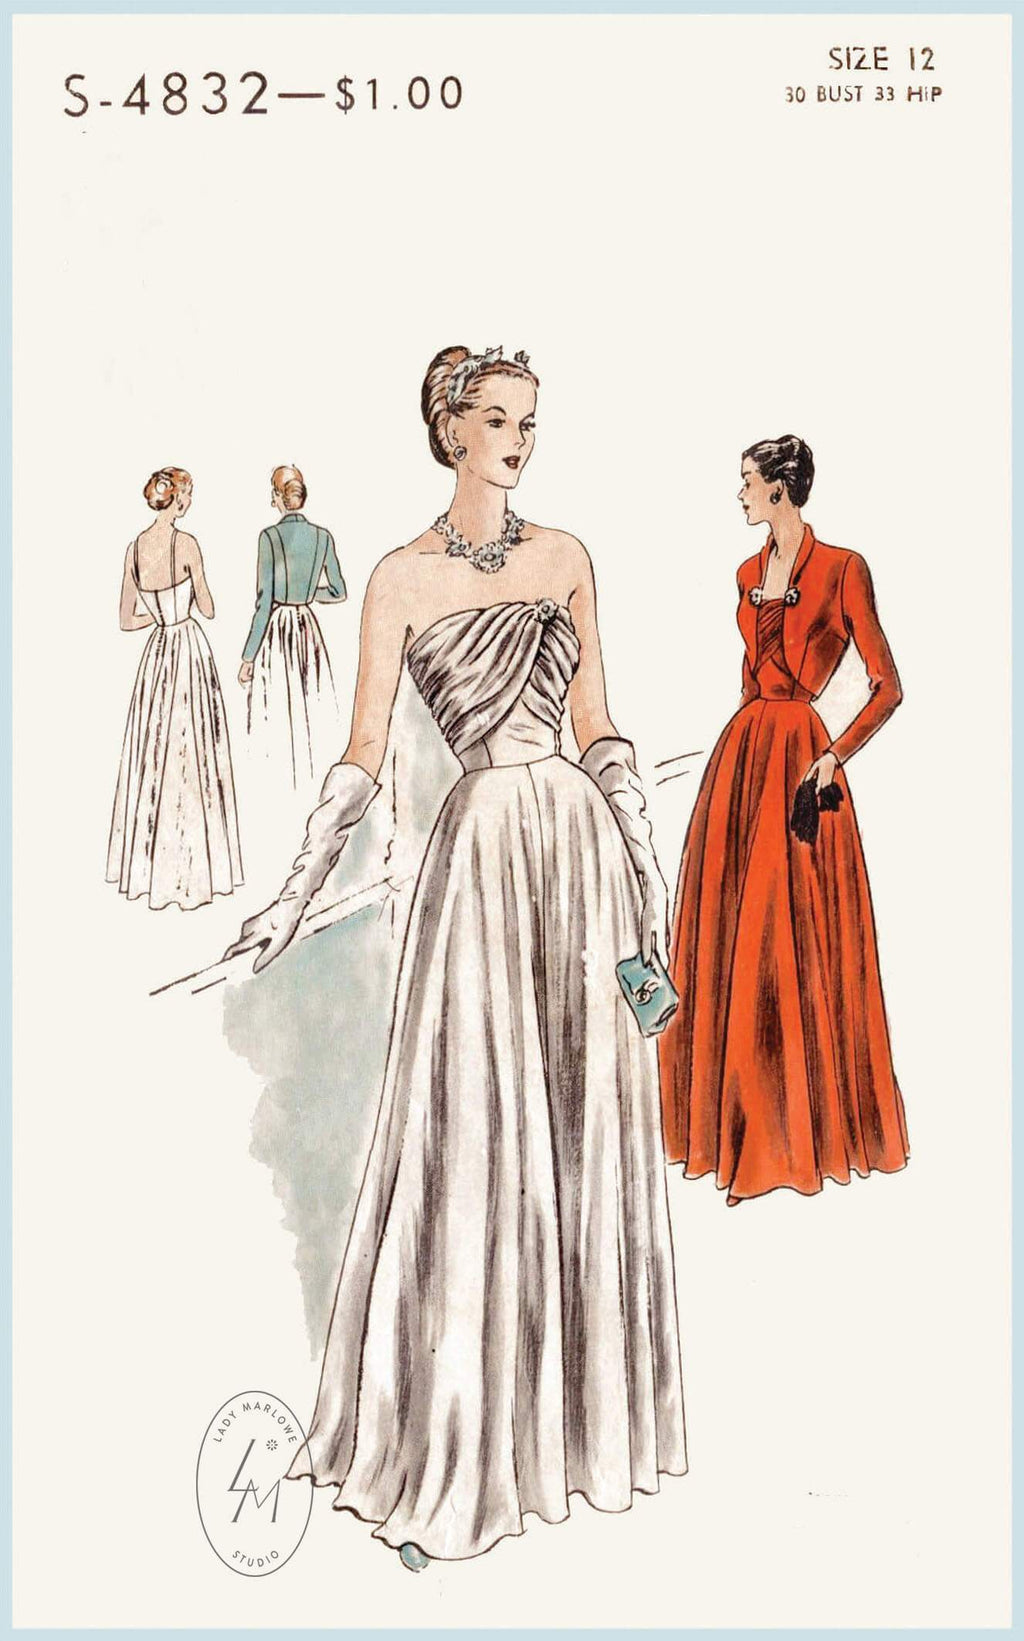 1940s evening dresses